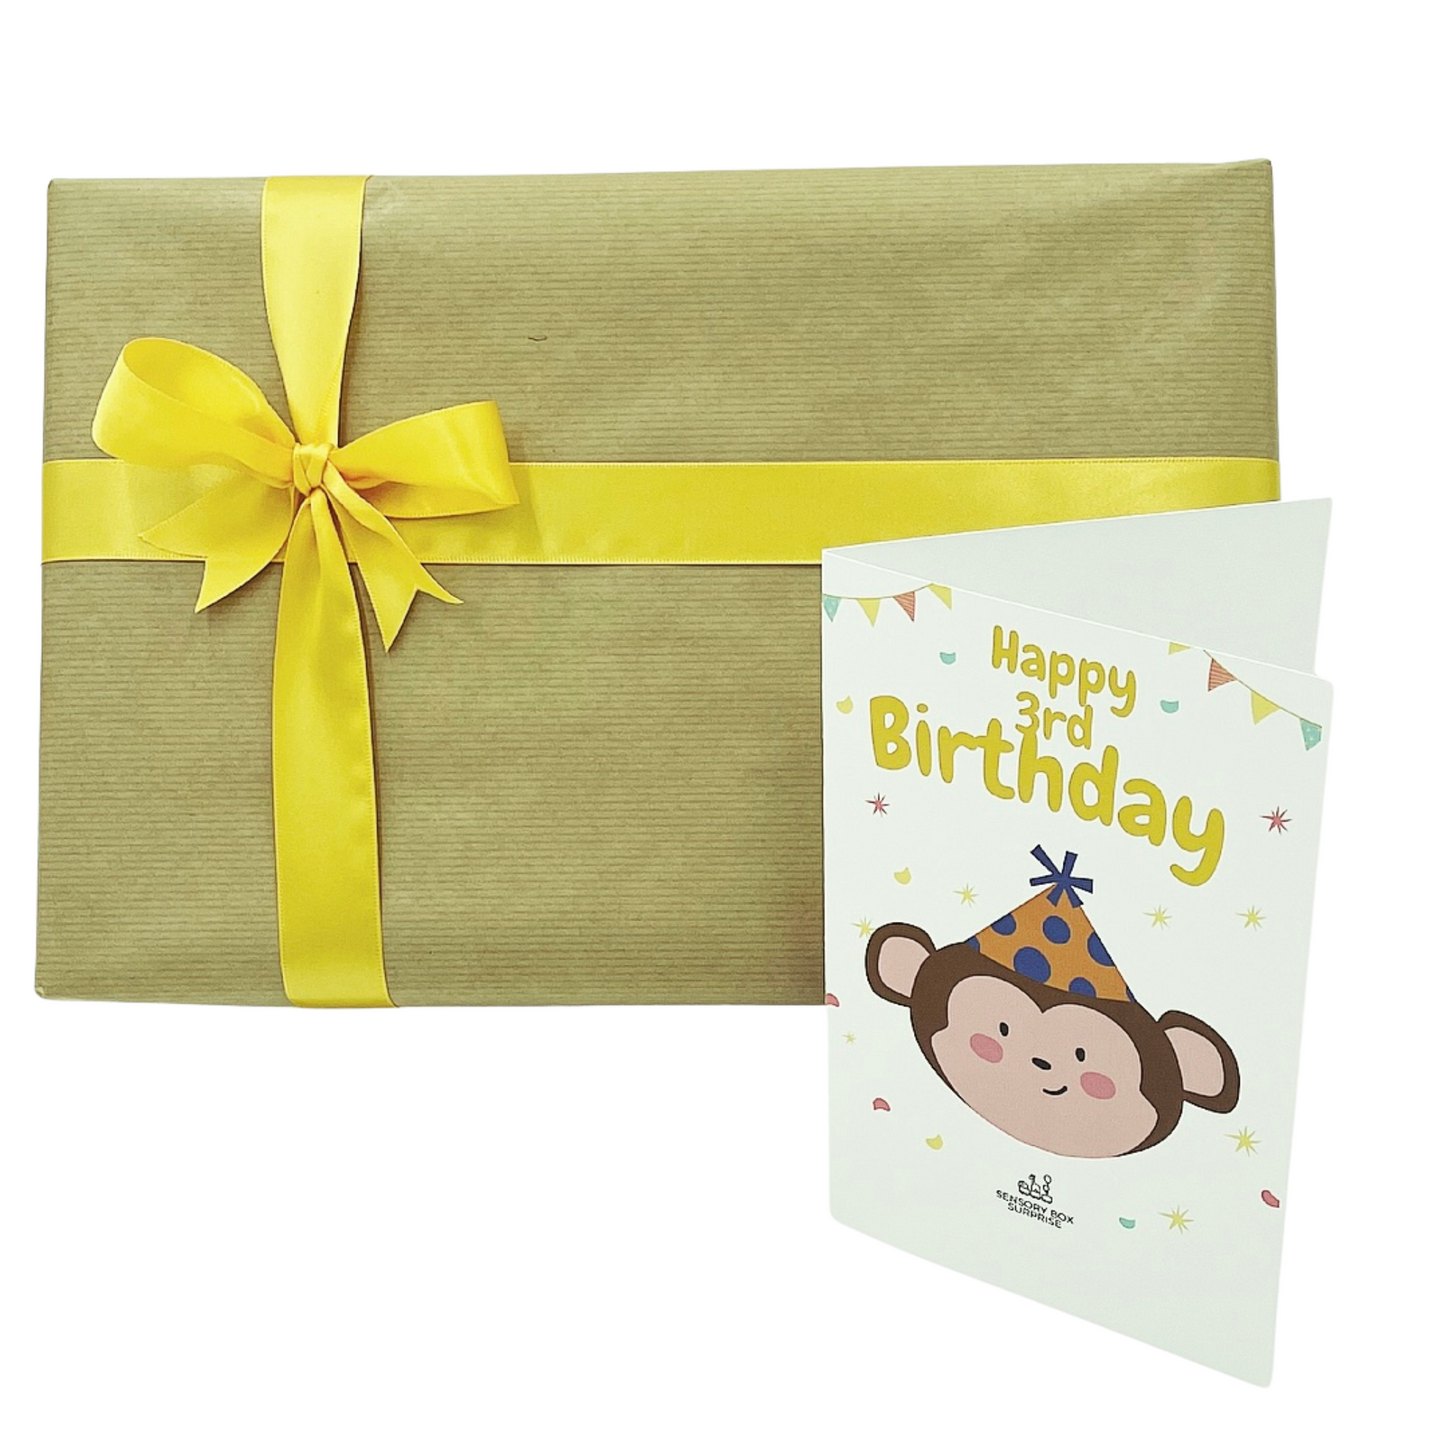 Third Birthday Card & Gift Wrap